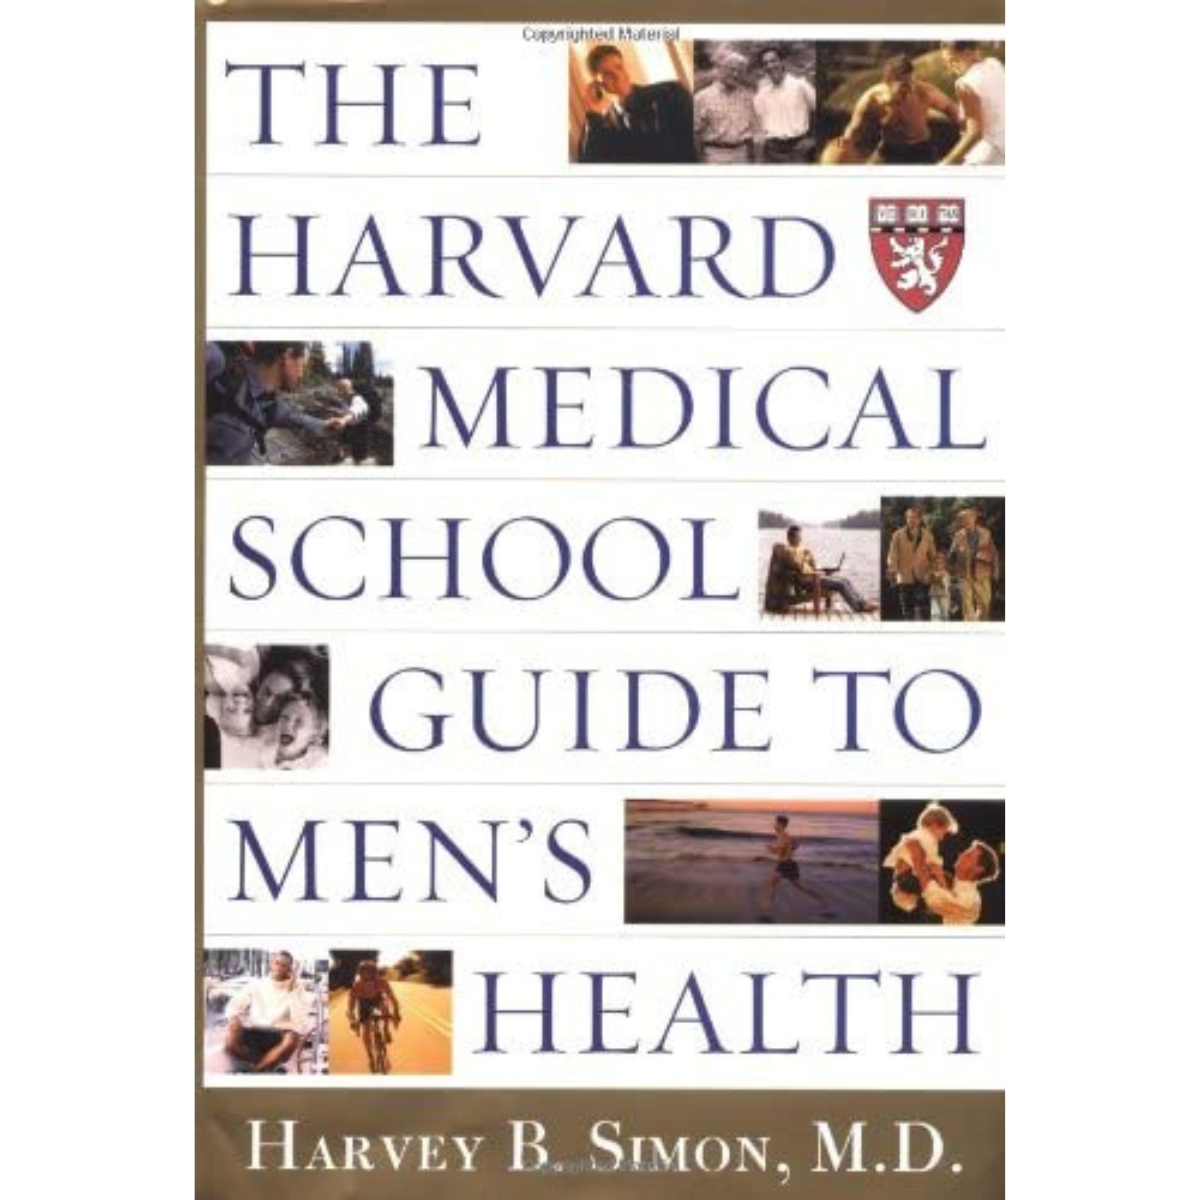 Harvard Medical School Guide To Men's Health, The